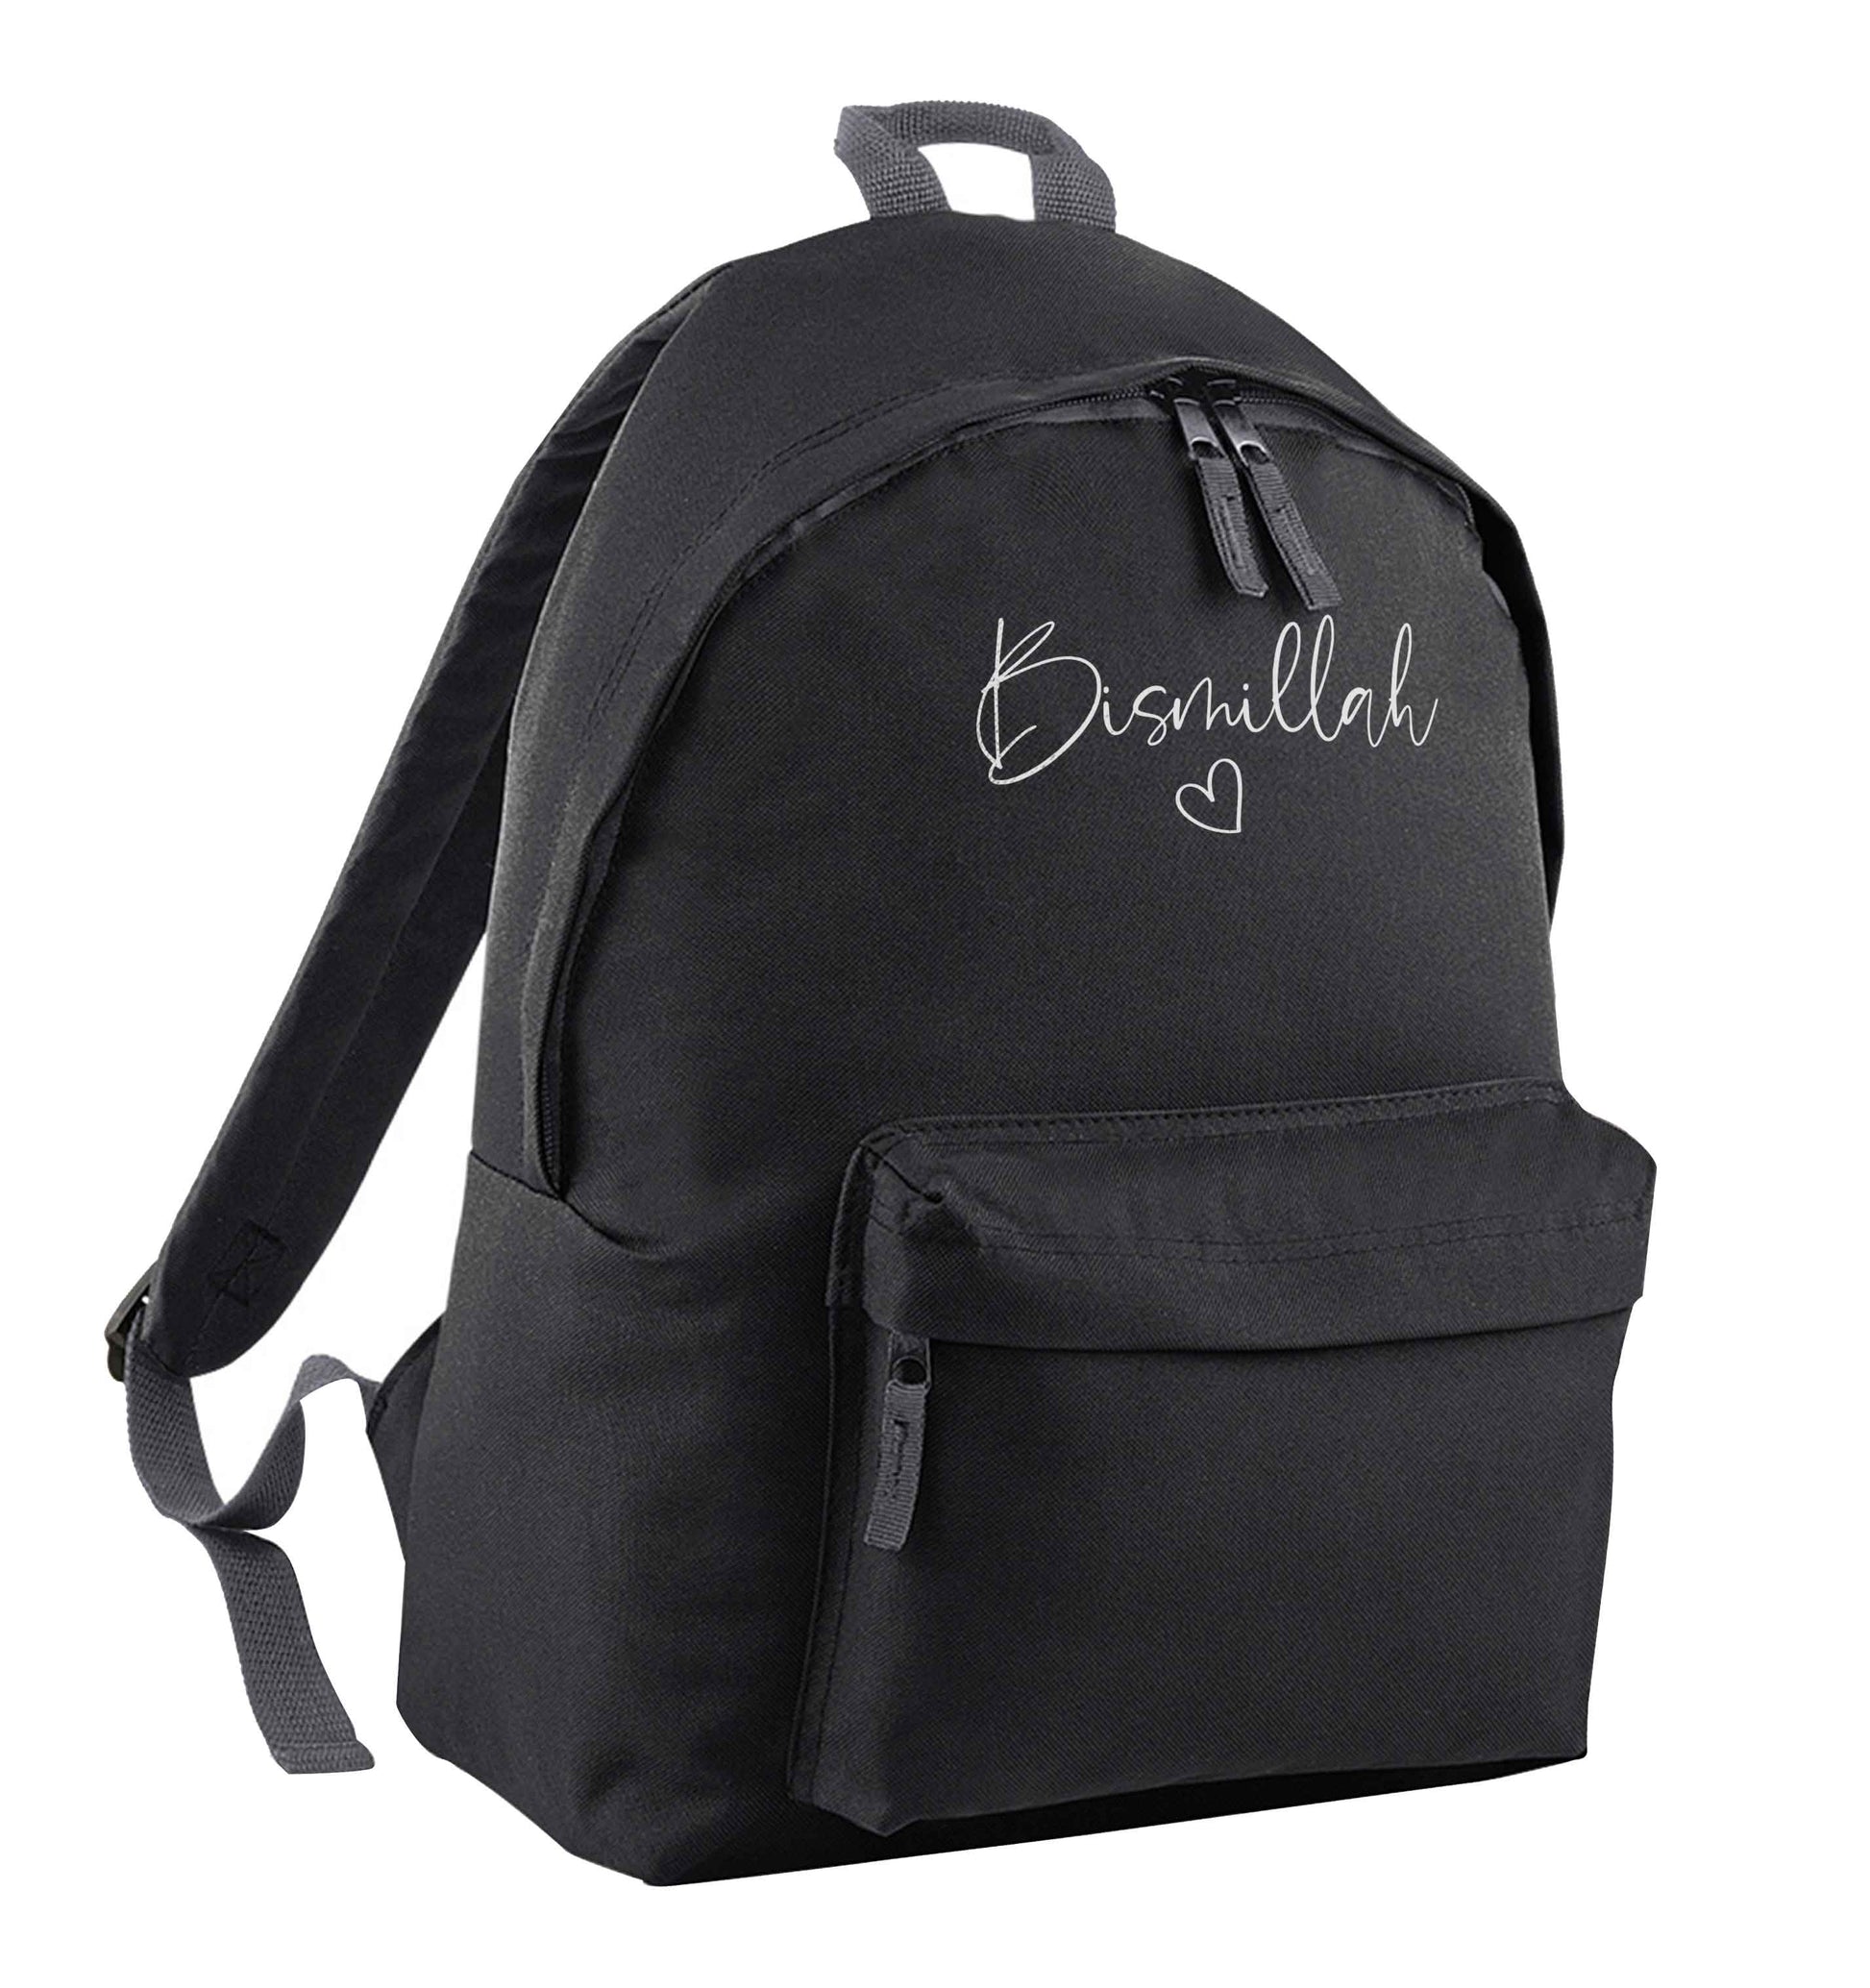 Bismillah black adults backpack